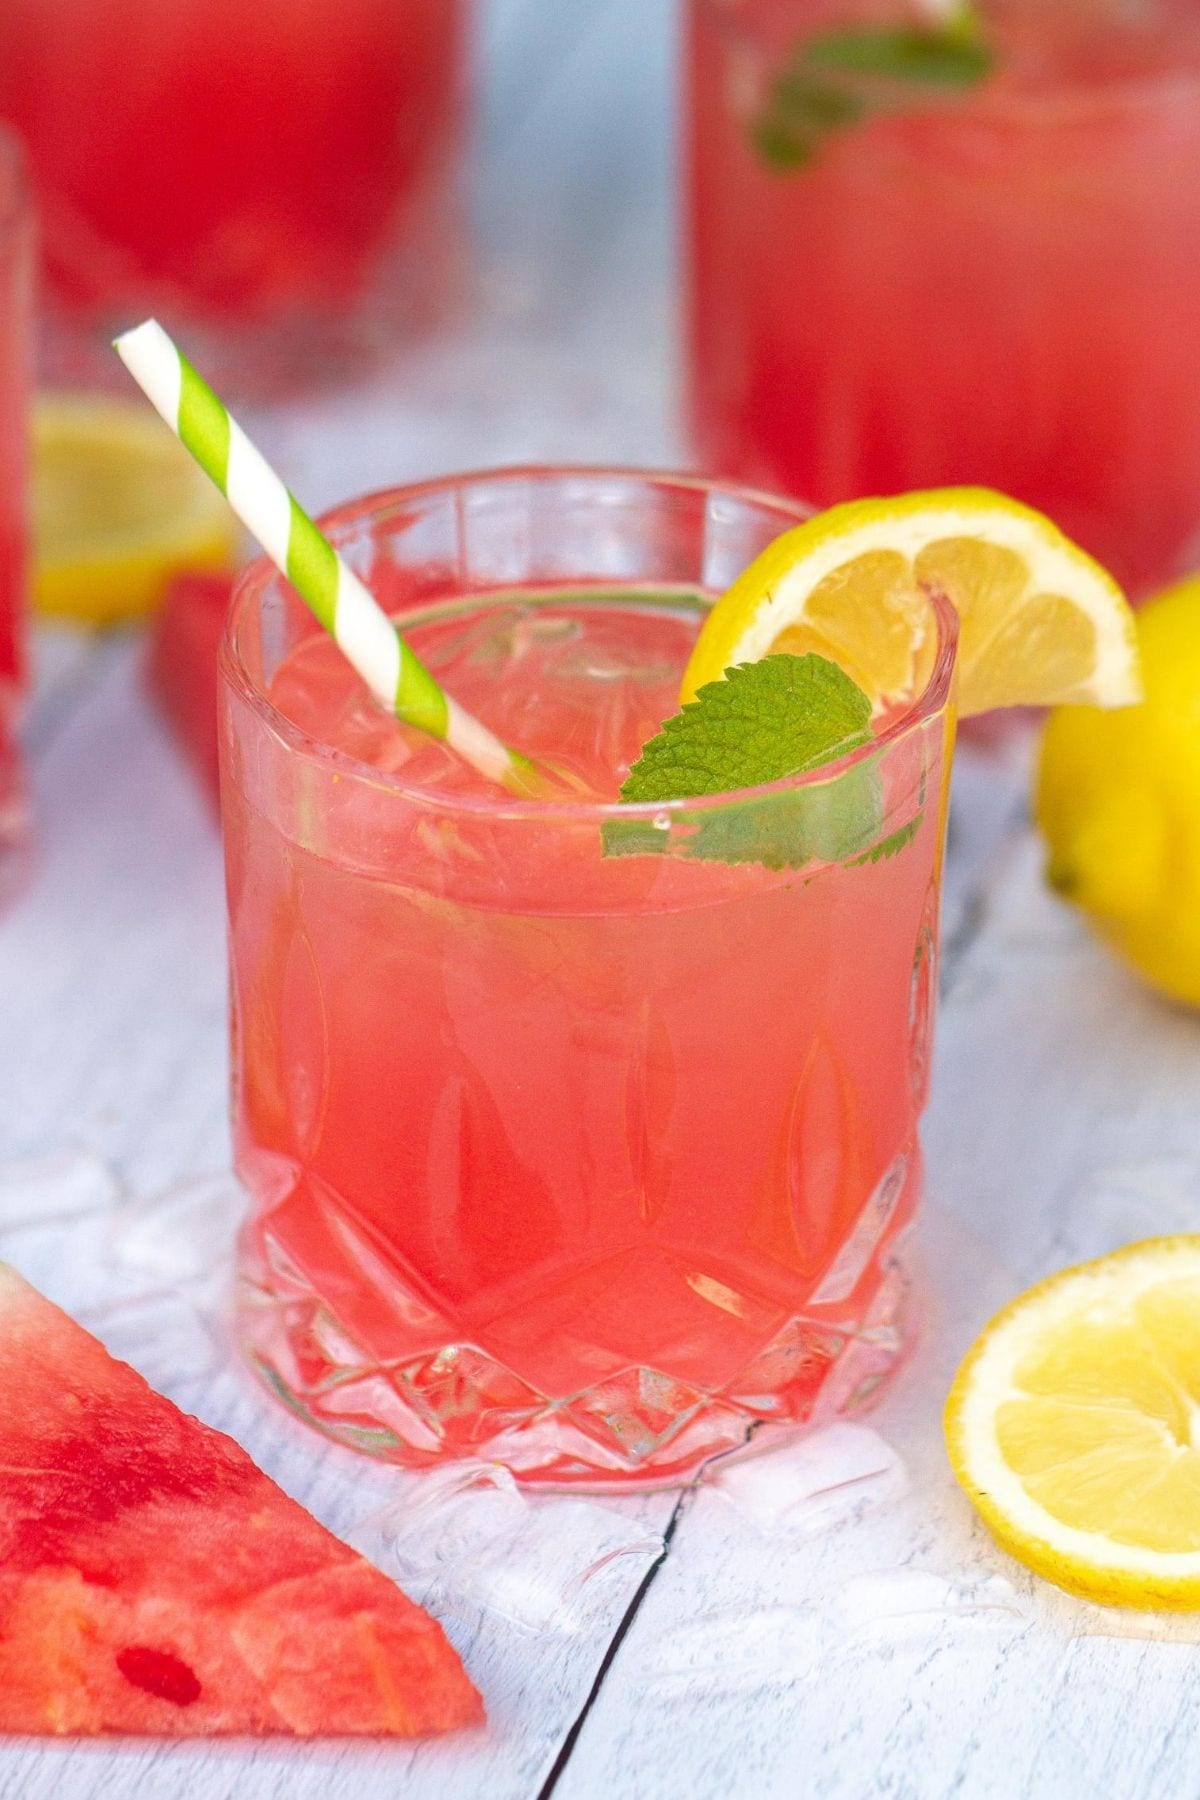 A glass of watermelon lemonade with a fresh mint leaf.